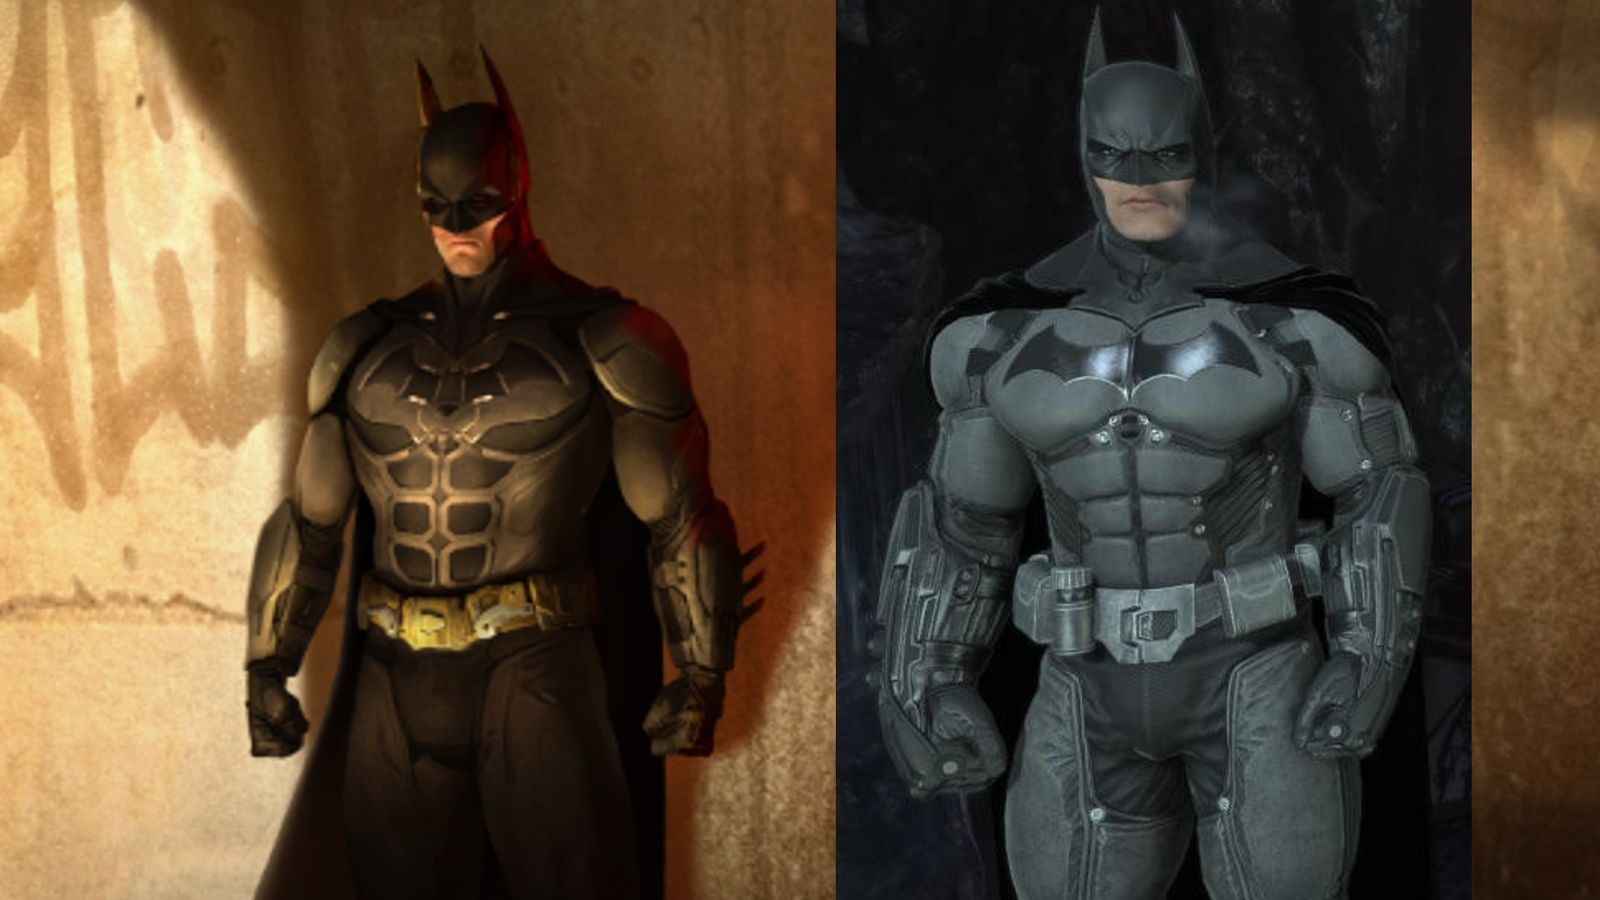 Batman Arkham Shadow key art next to an image of the Arkham Origins suit